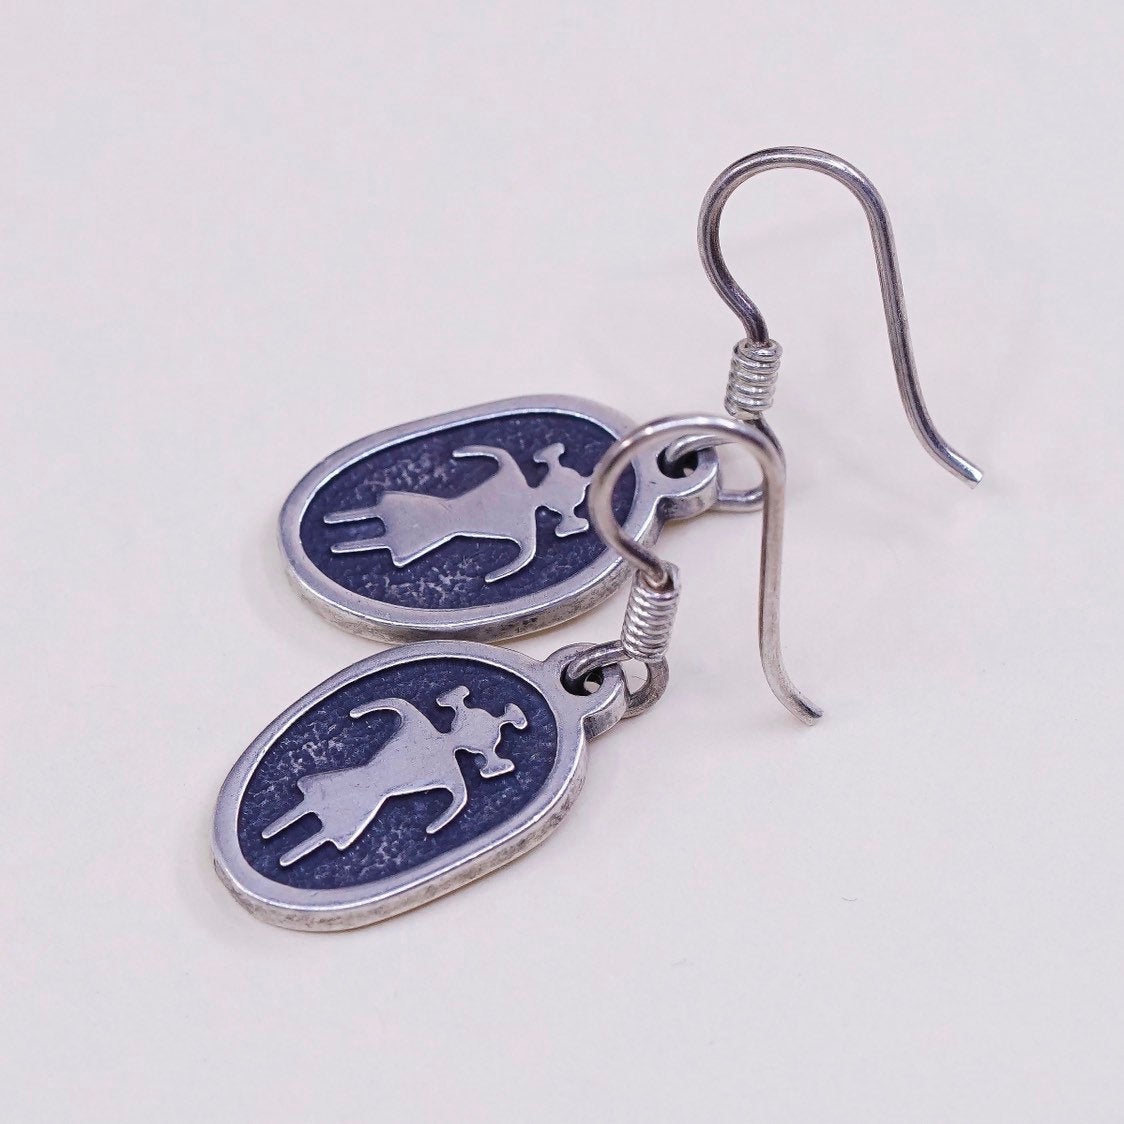 vtg Native American hopi sterling silver handmade earrings 925 figure tag drops